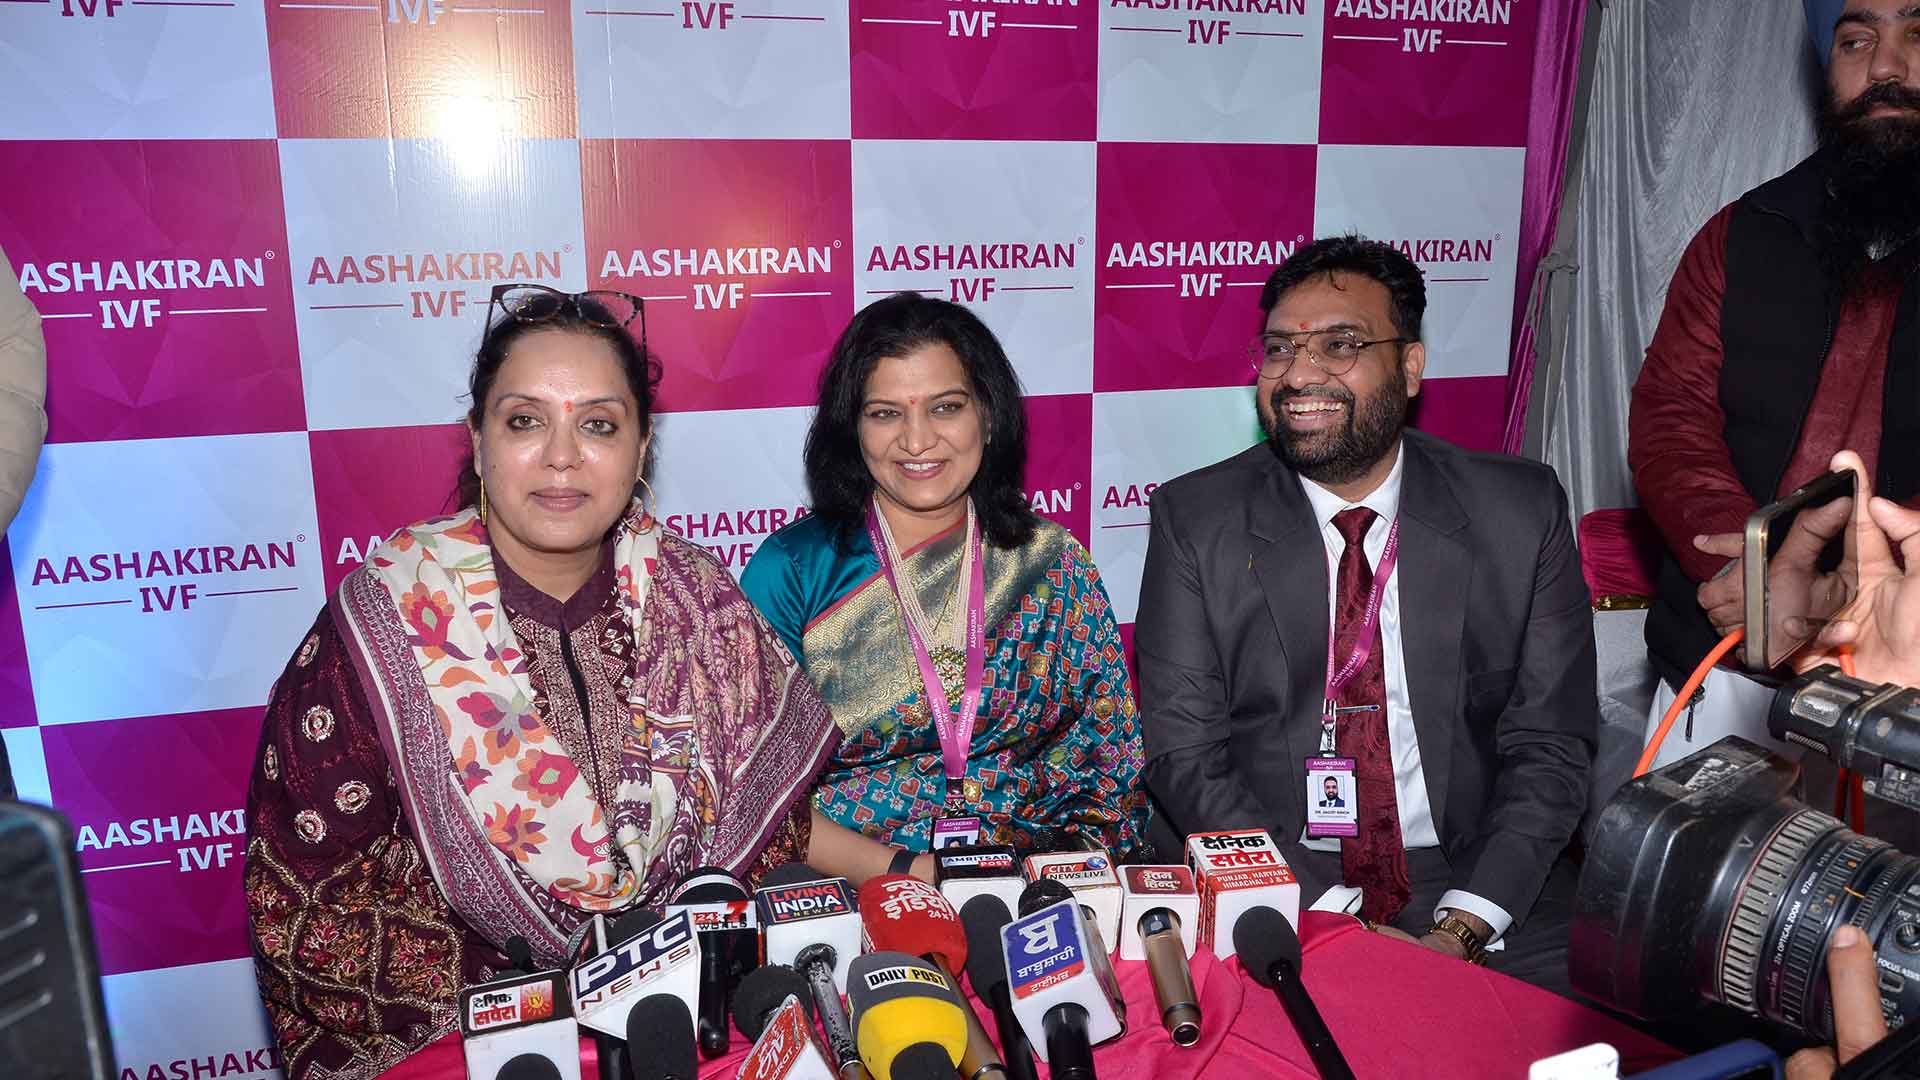 Updates - AASHAKIRAN IVF-Highest Success Rate in Punjab